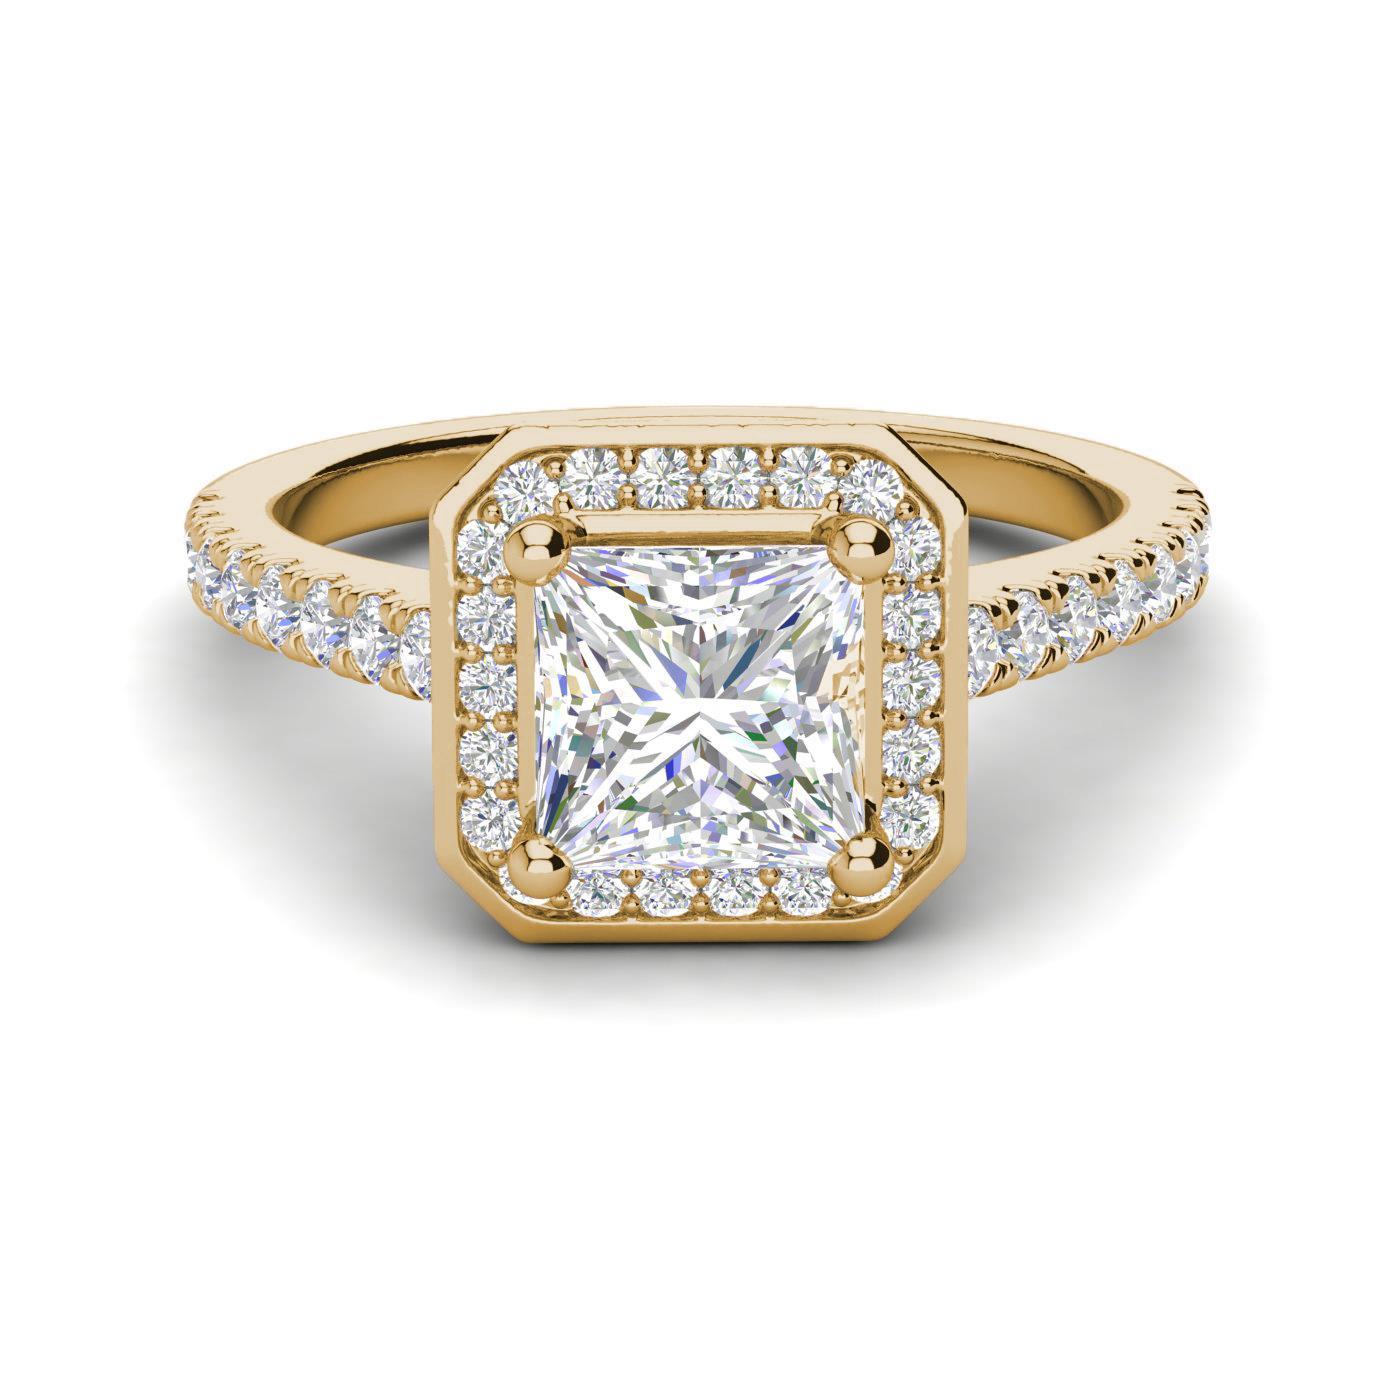 Halo Pave 1.7 Carat VS2/H Princess Cut Diamond Engagement Ring Yellow Gold eBay